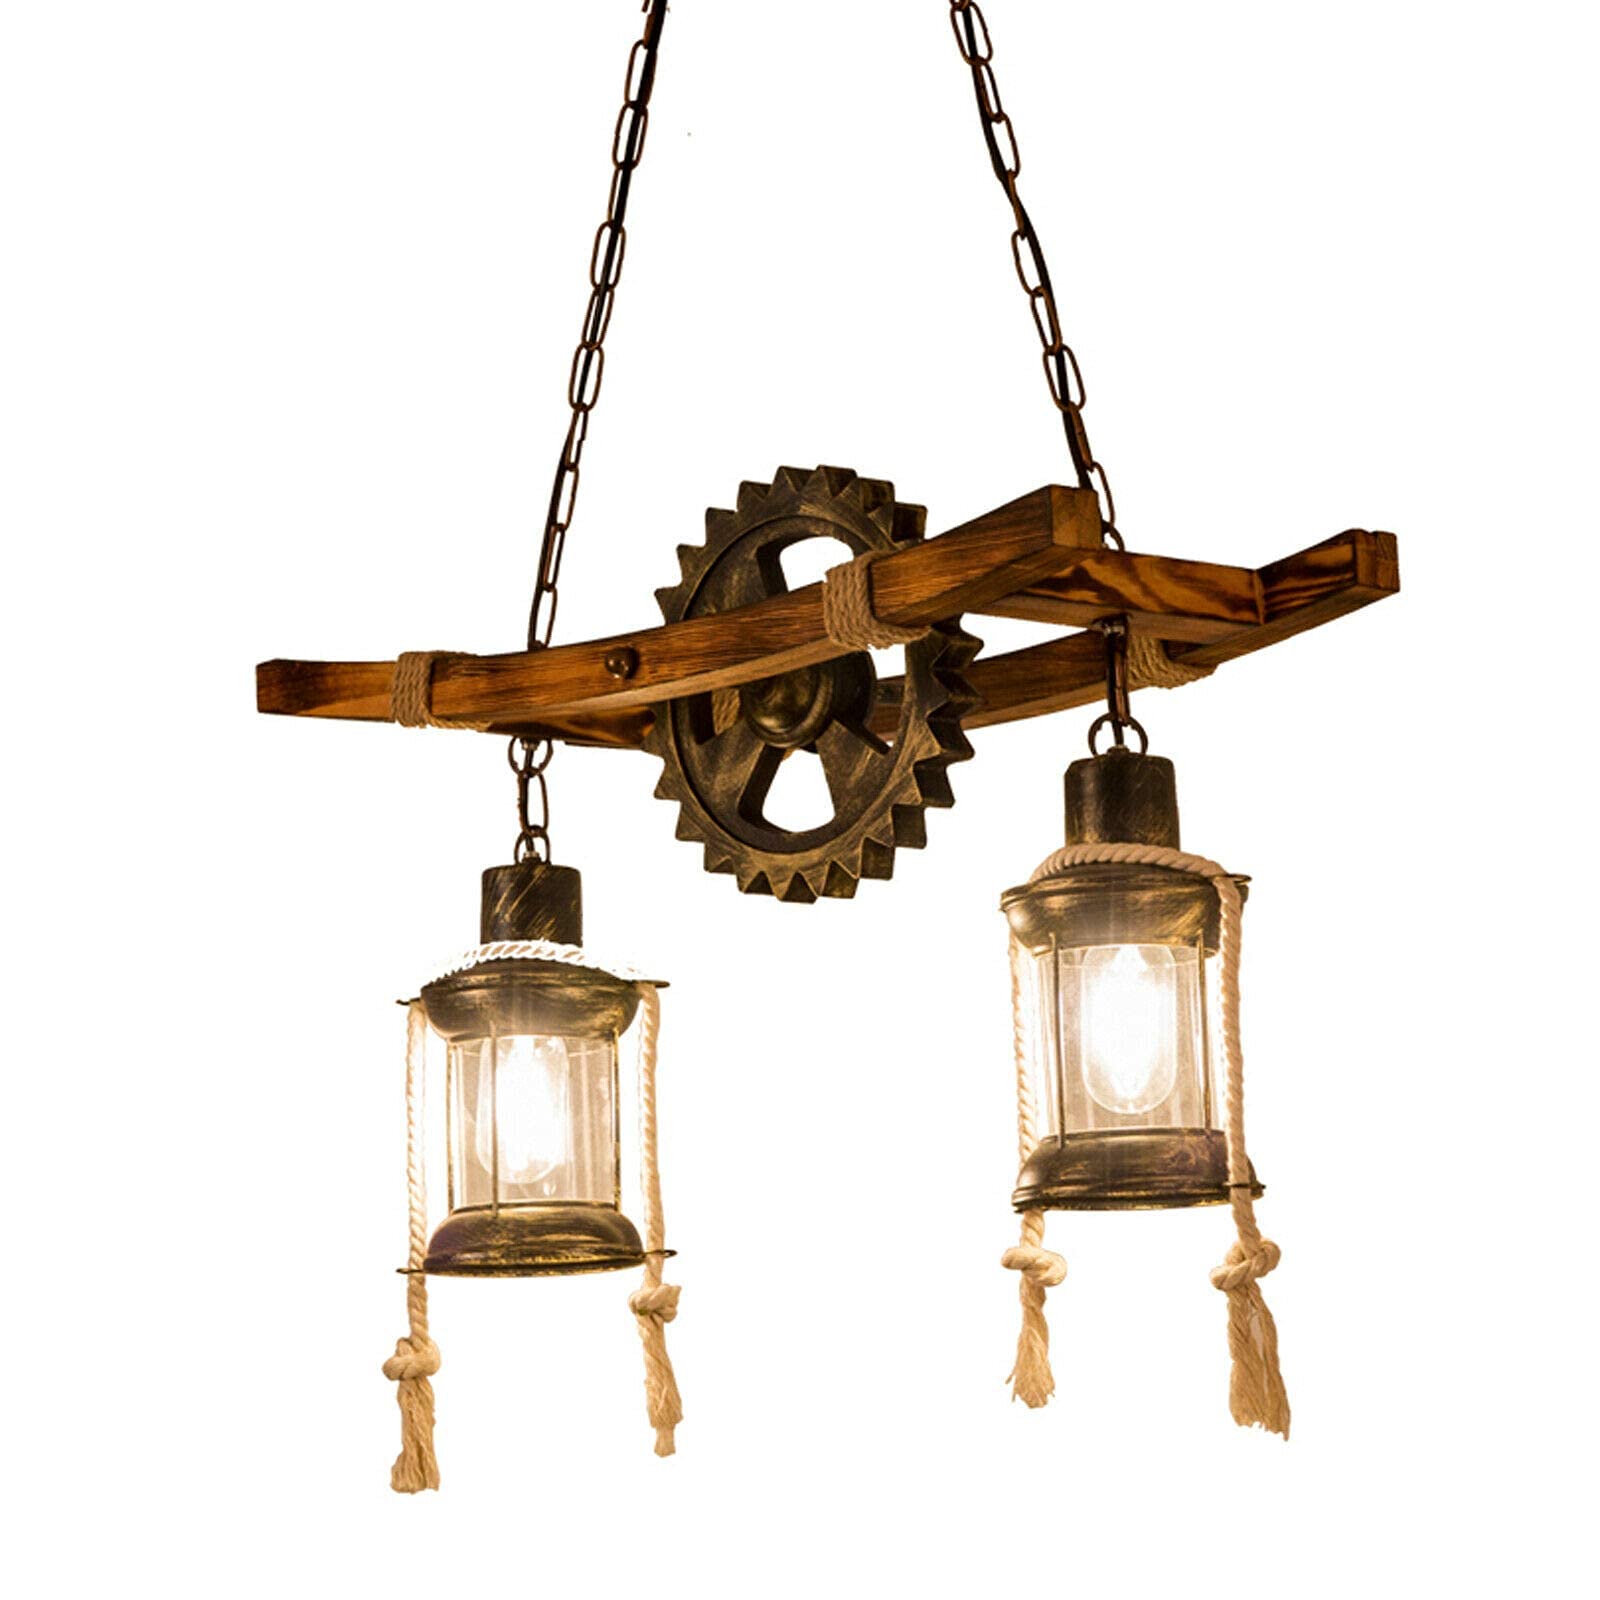 Lampadario retrò in legno, 2 teste metallo lampadario, lampada a sospensione regolabile